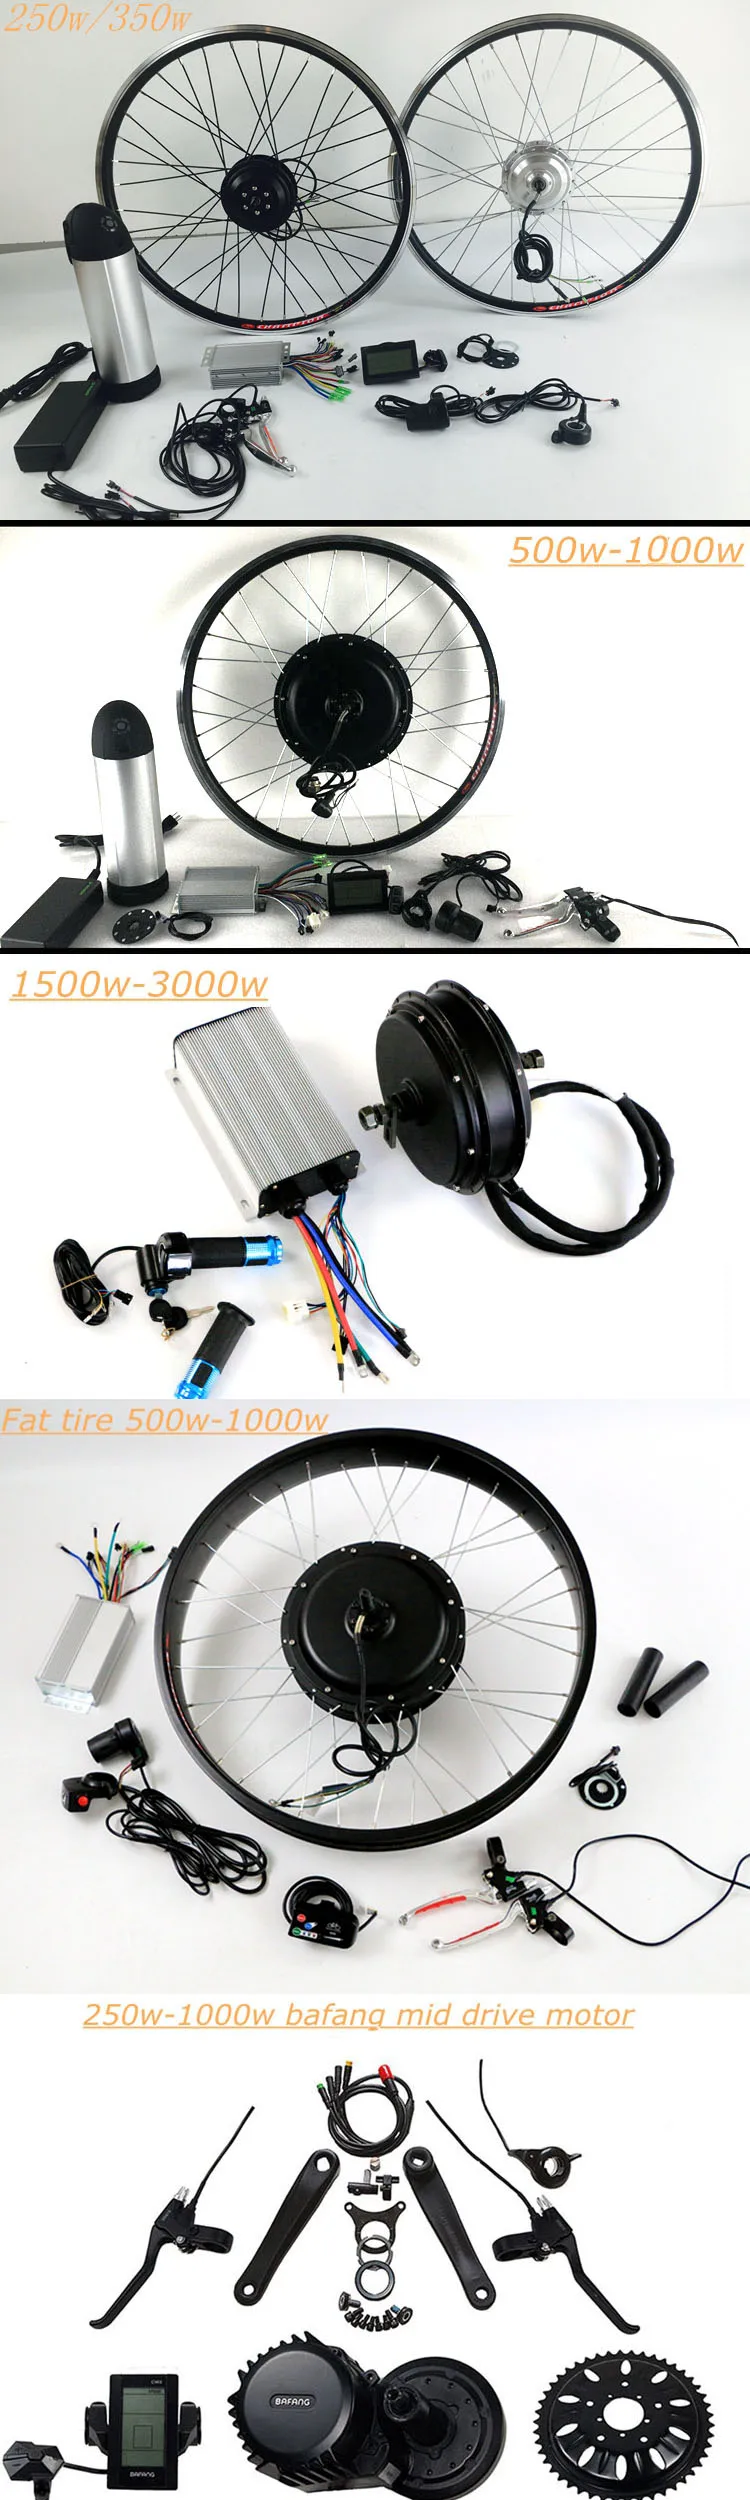 electric bicycle kit 1000w